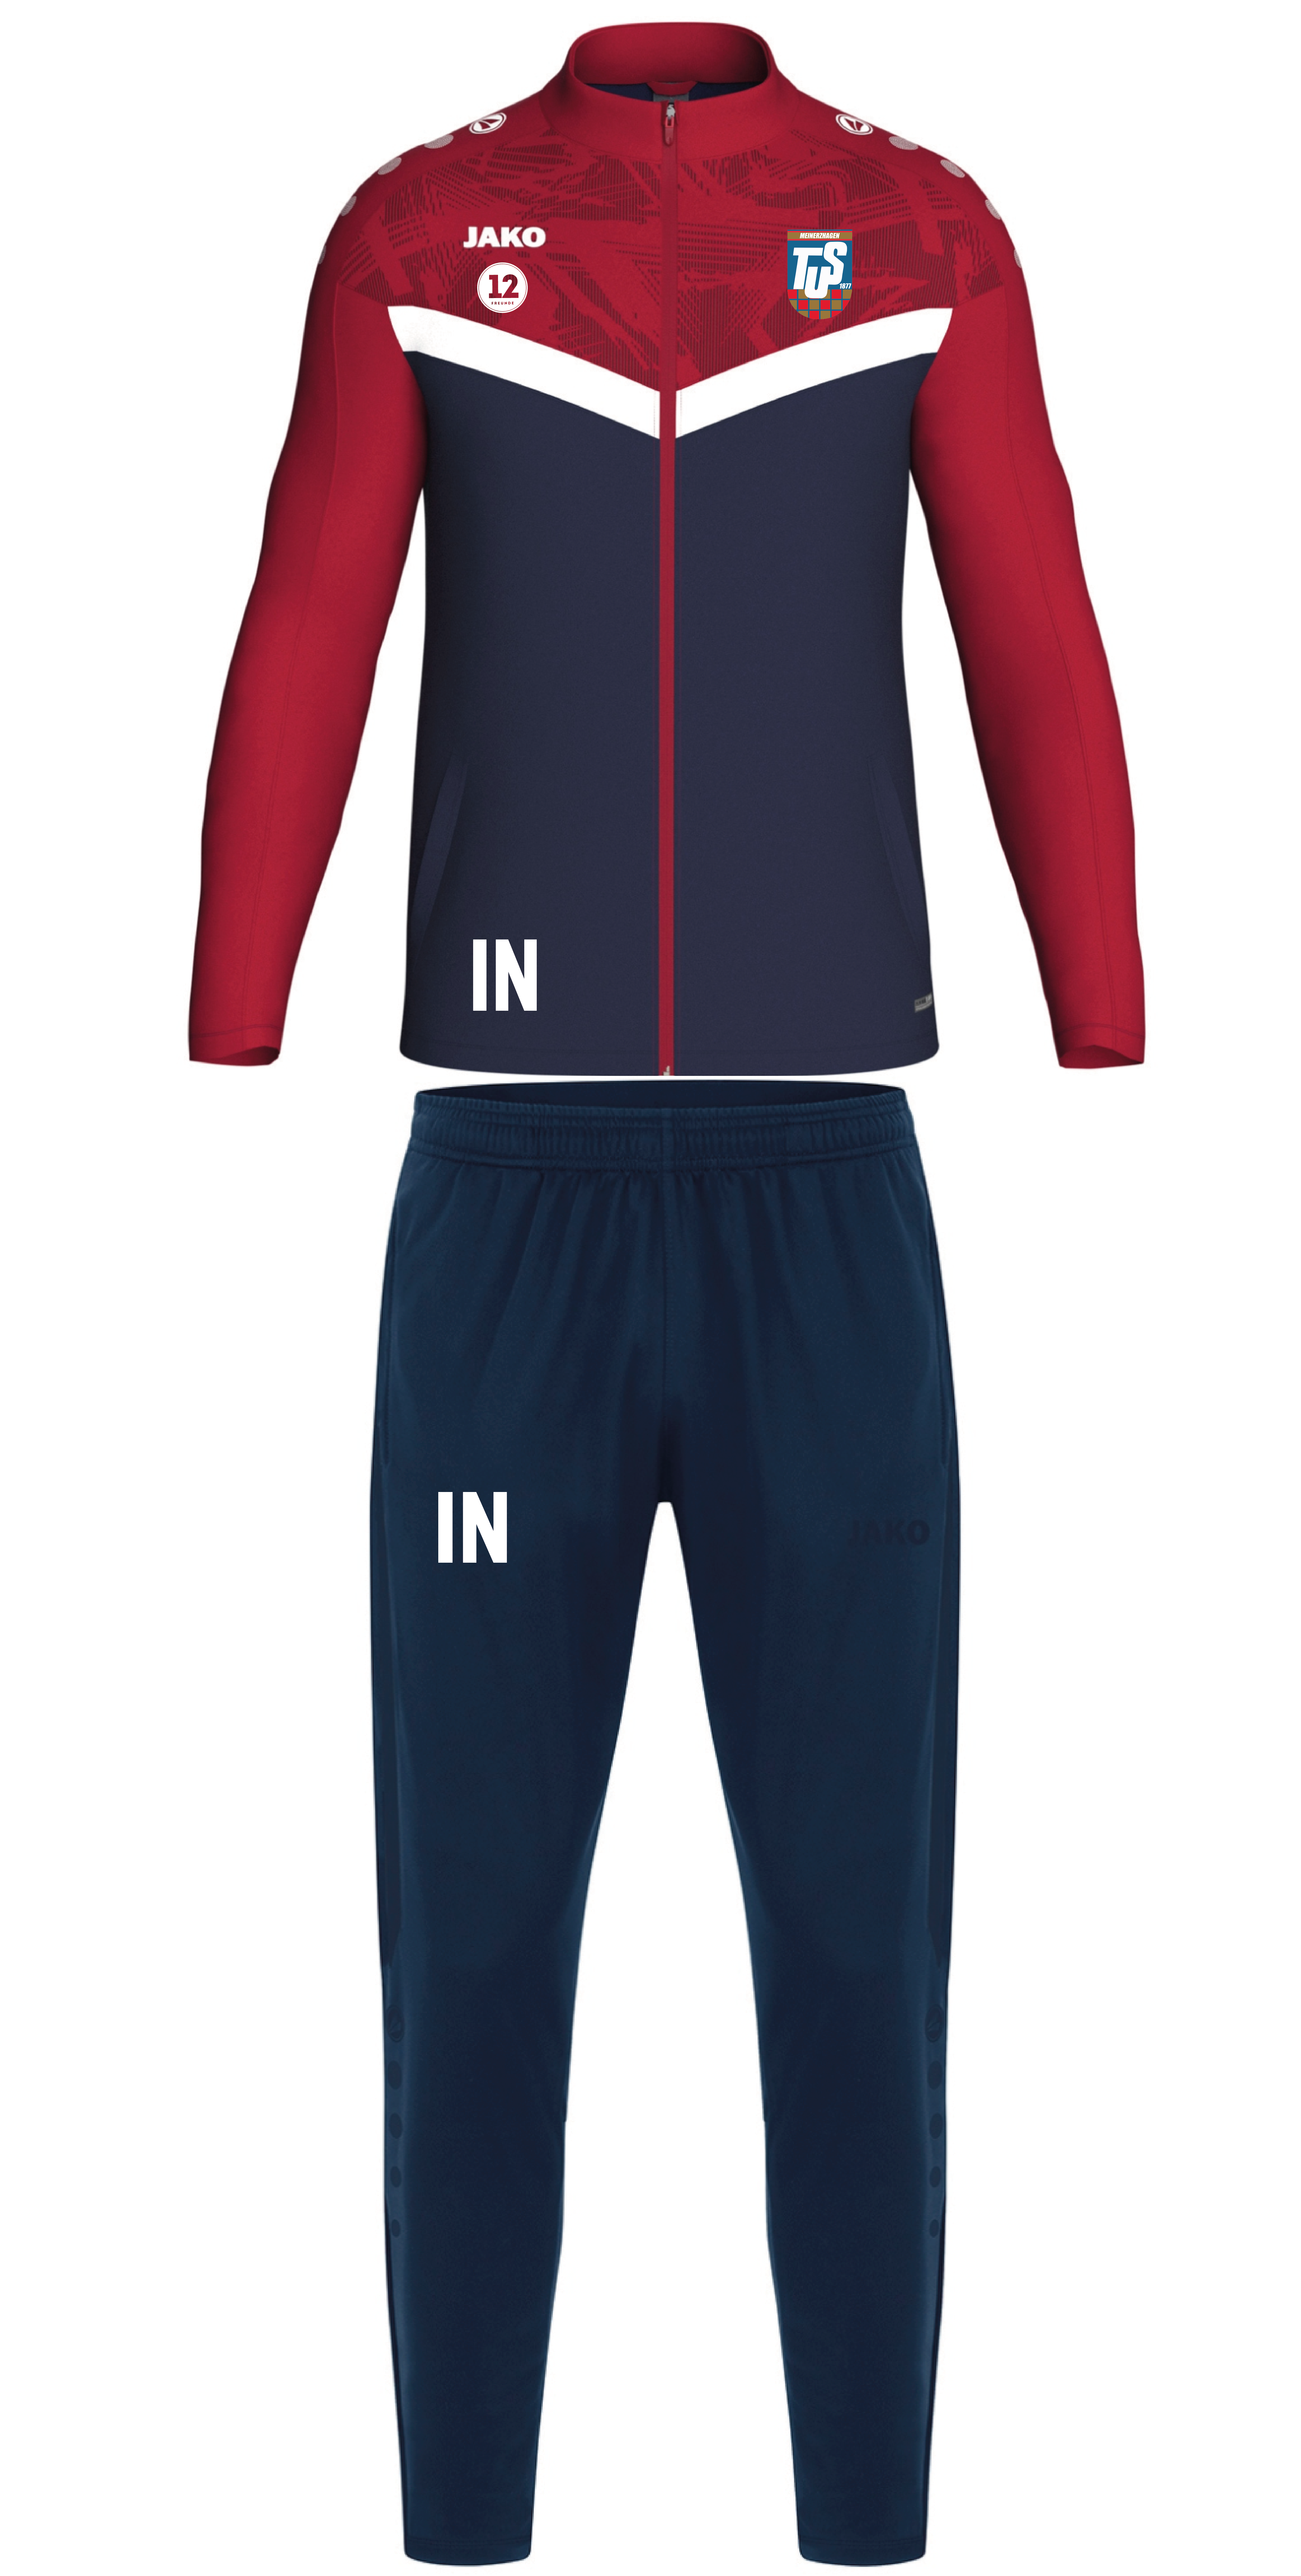 Trainingsanzug Kinder mit Logo Inis und Sponsor